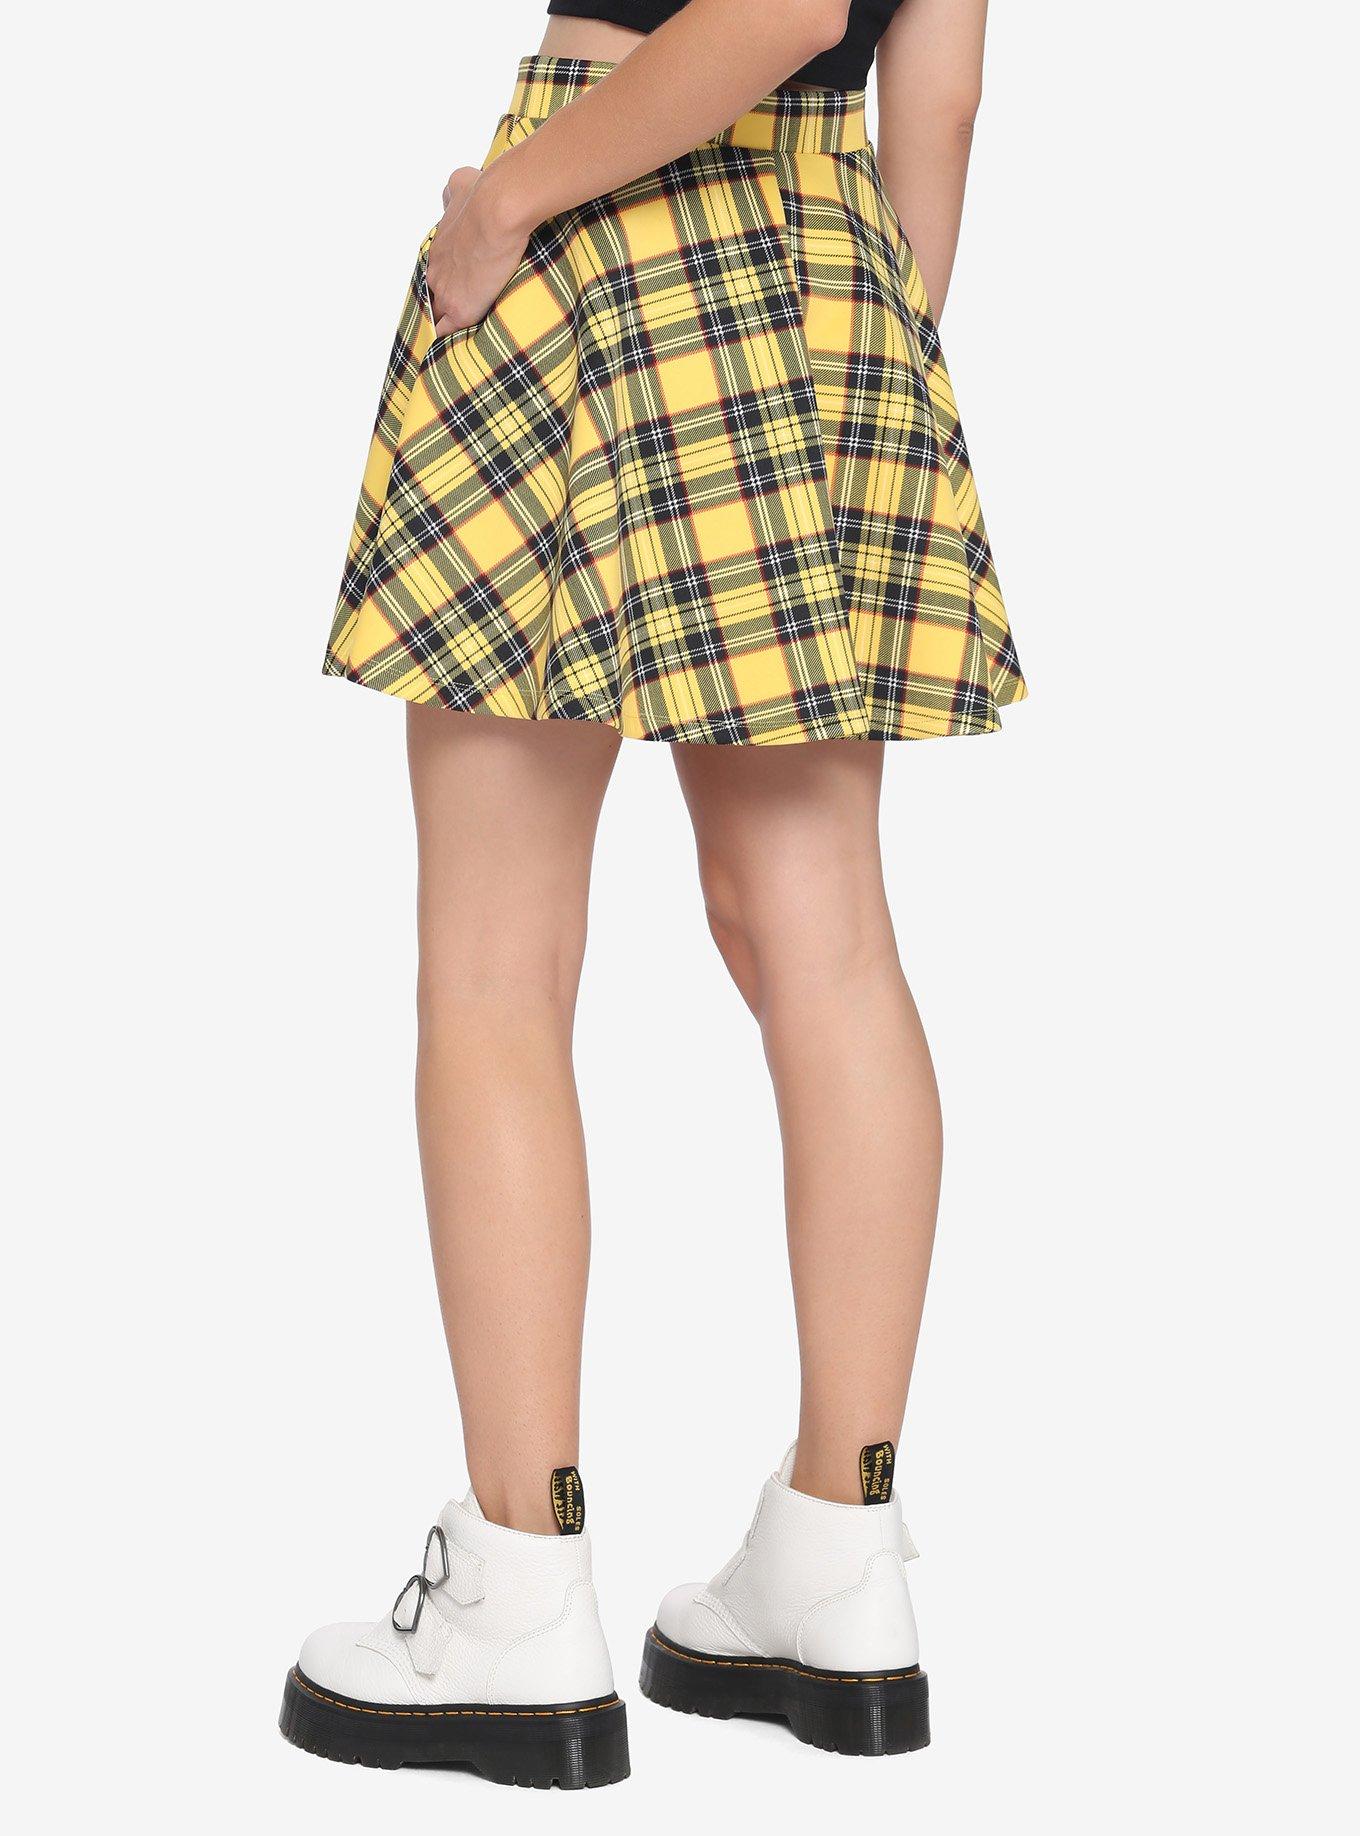 Yellow Plaid Lace-Up Skirt, PLAID - YELLOW, alternate